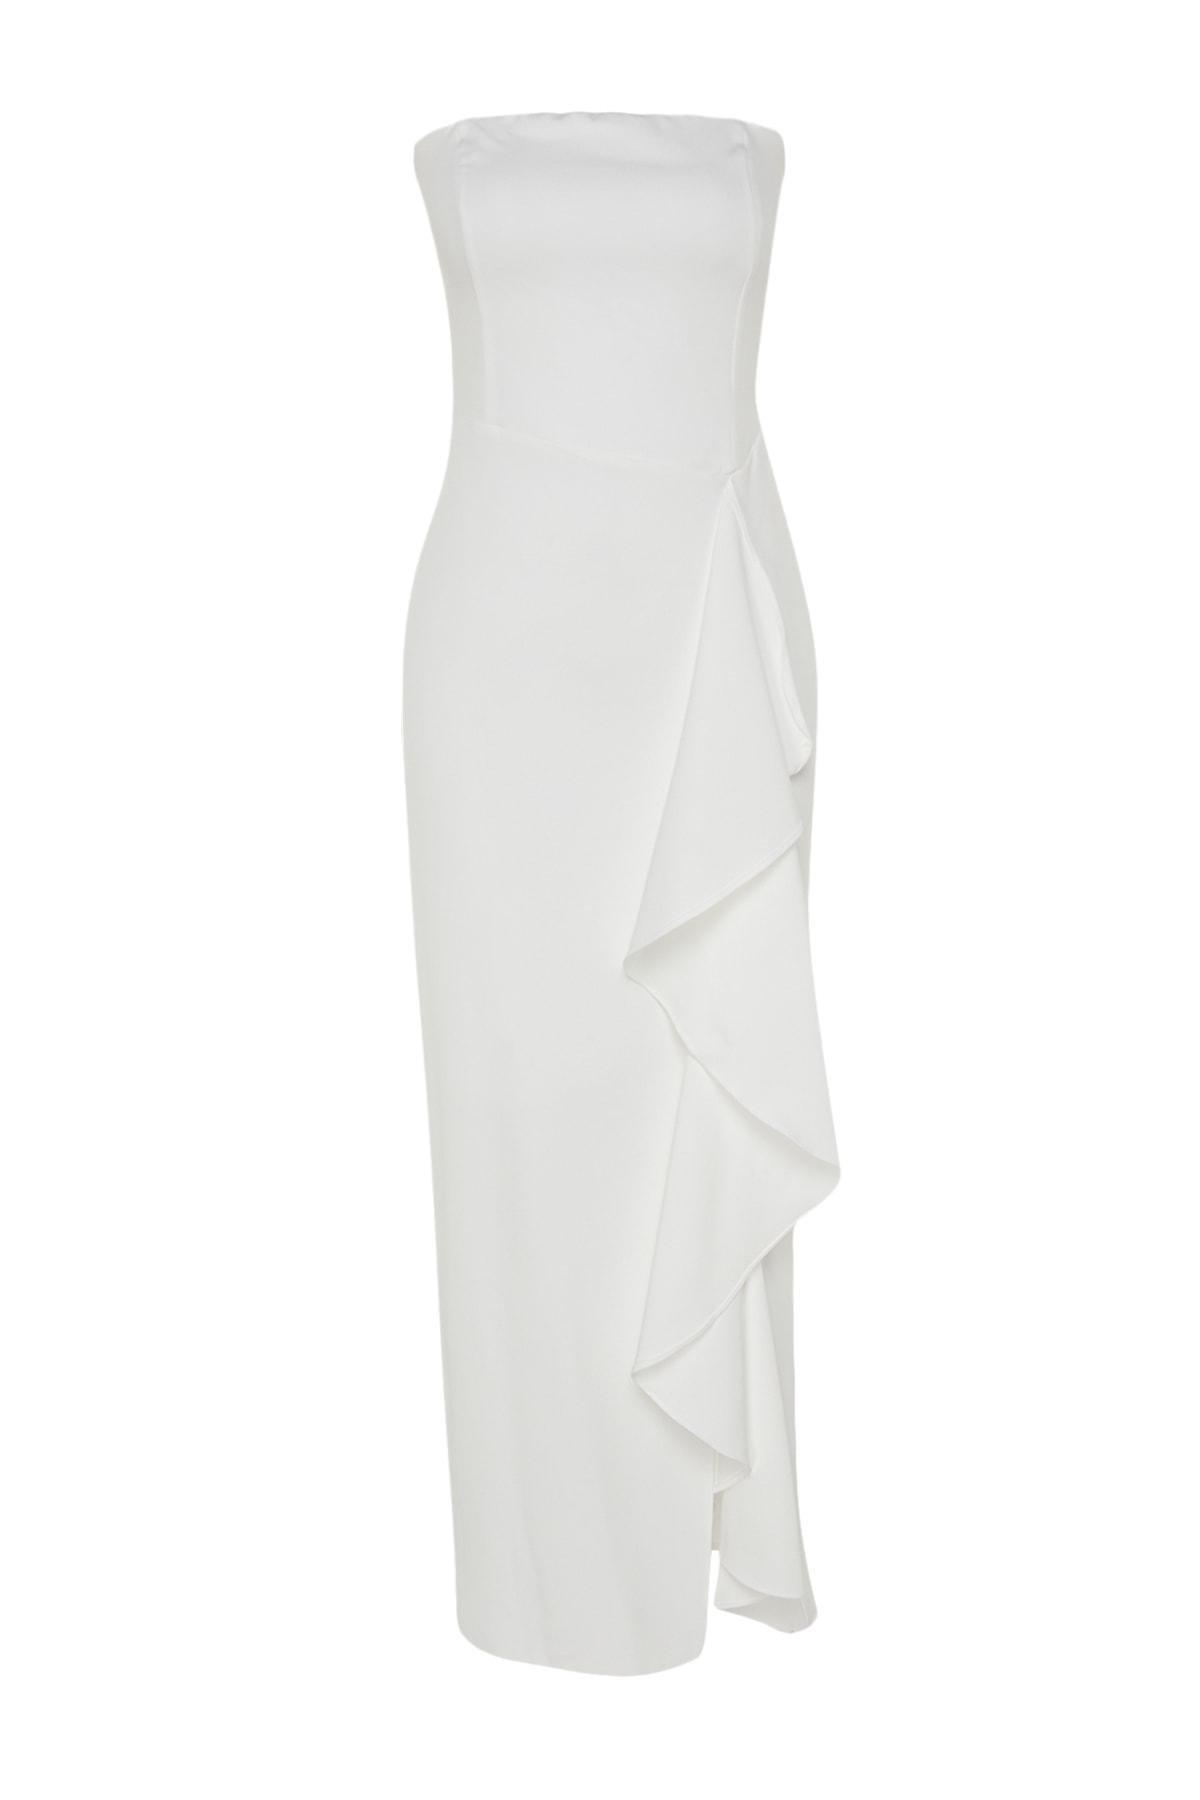 Trendyol - White Strapless Shift Occassionwear Dress